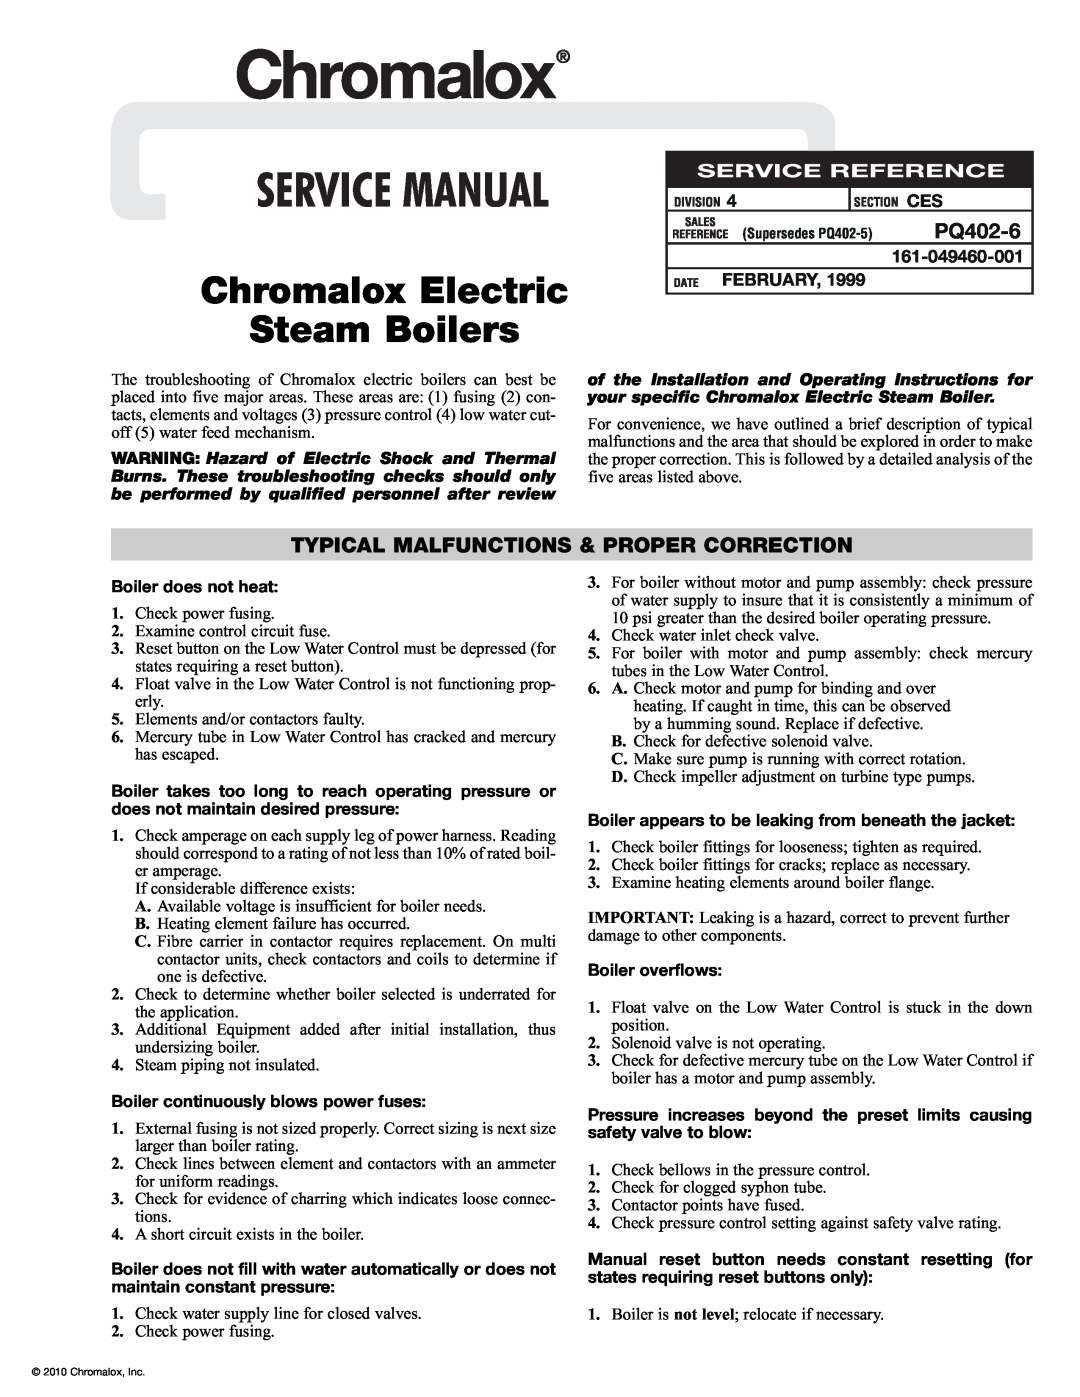 Chromalox PQ402-6 service manual Typical Malfunctions & Proper Correction, Service Manual 